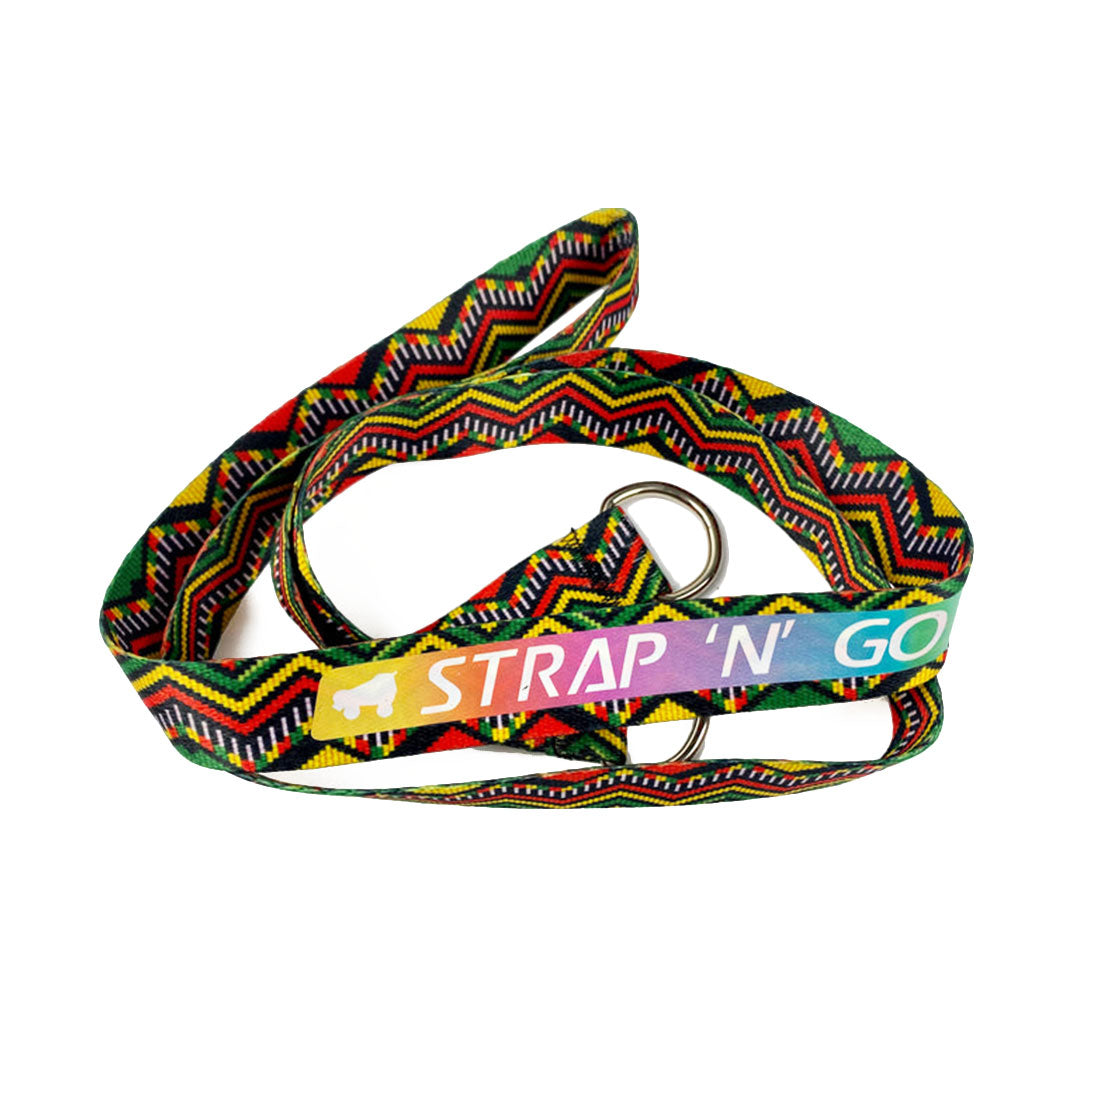 Strap N Go Skate Noose/Leash - Patterns Jamaican Roller Skate Accessories